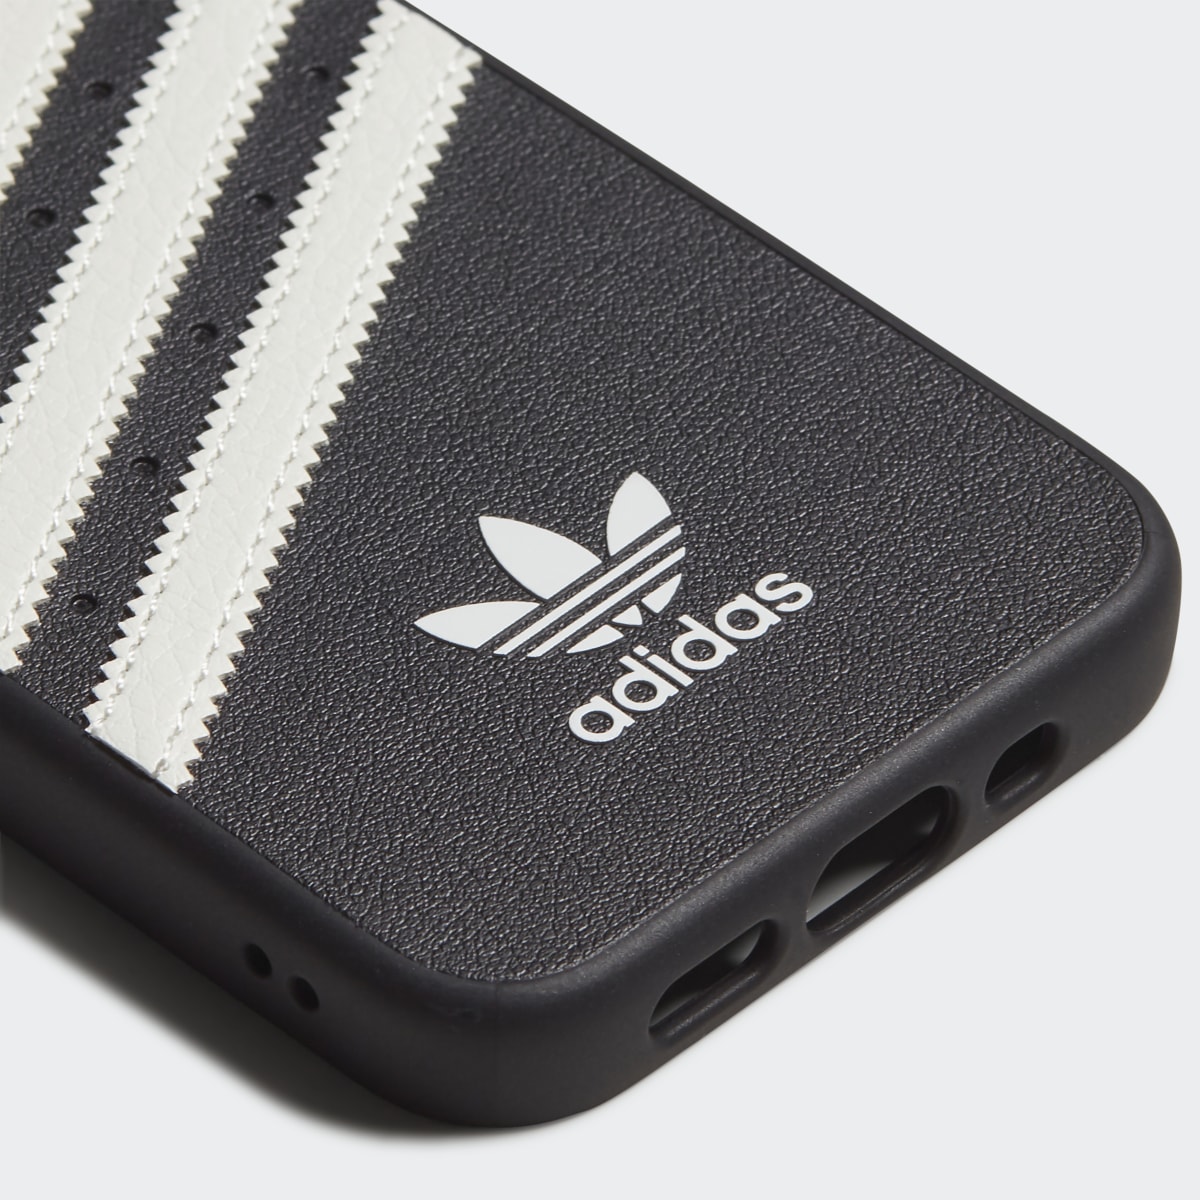 Adidas Molded Samba for iPhone 12 mini. 4